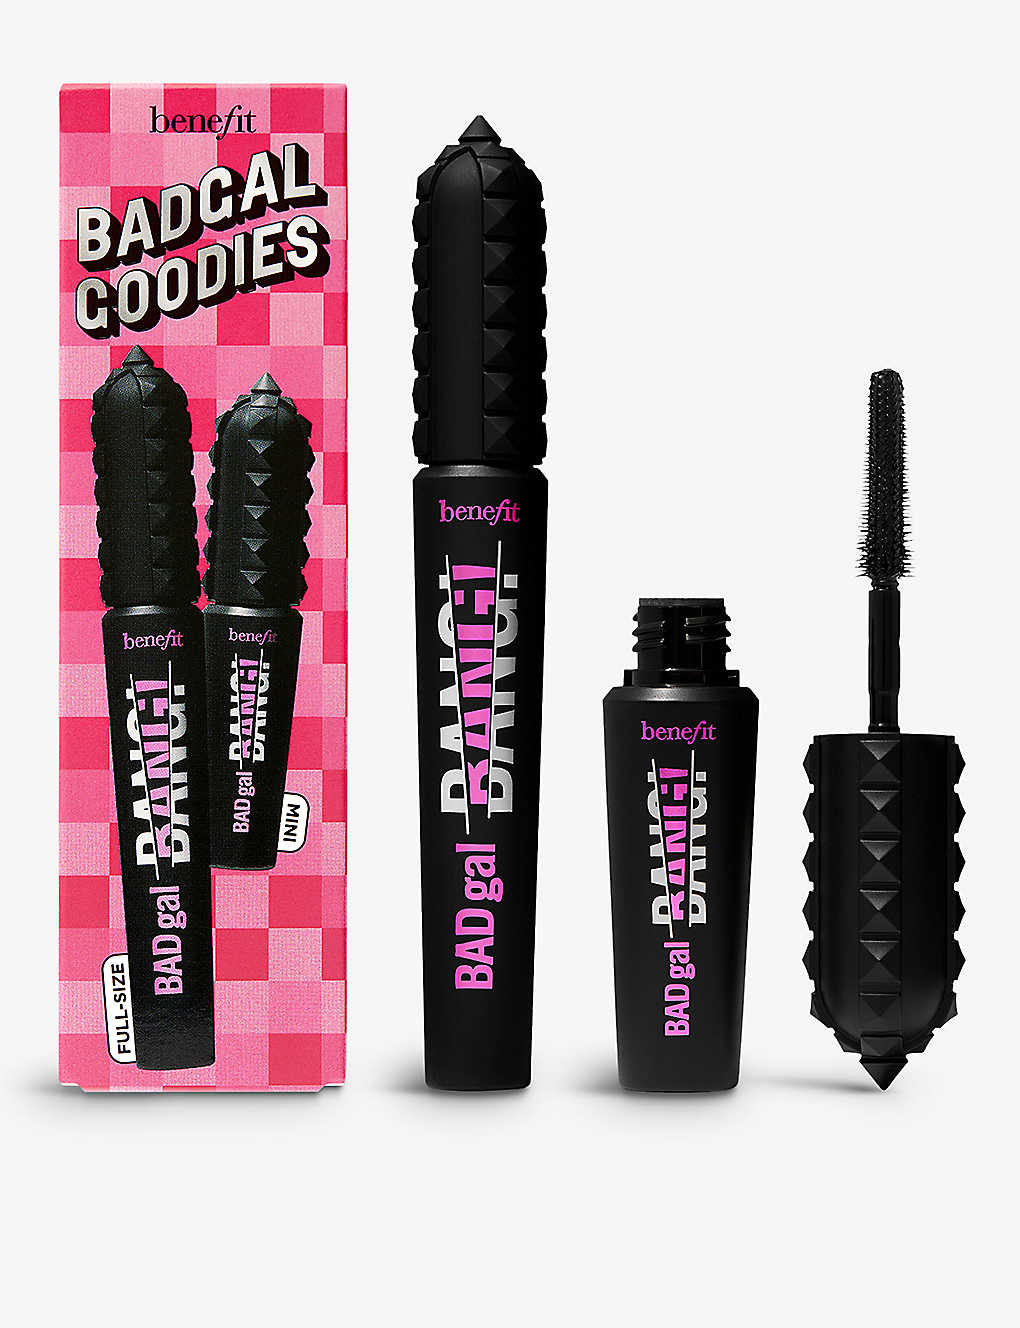 Benefit BADgal Goodies BADgal BANG! mascara set